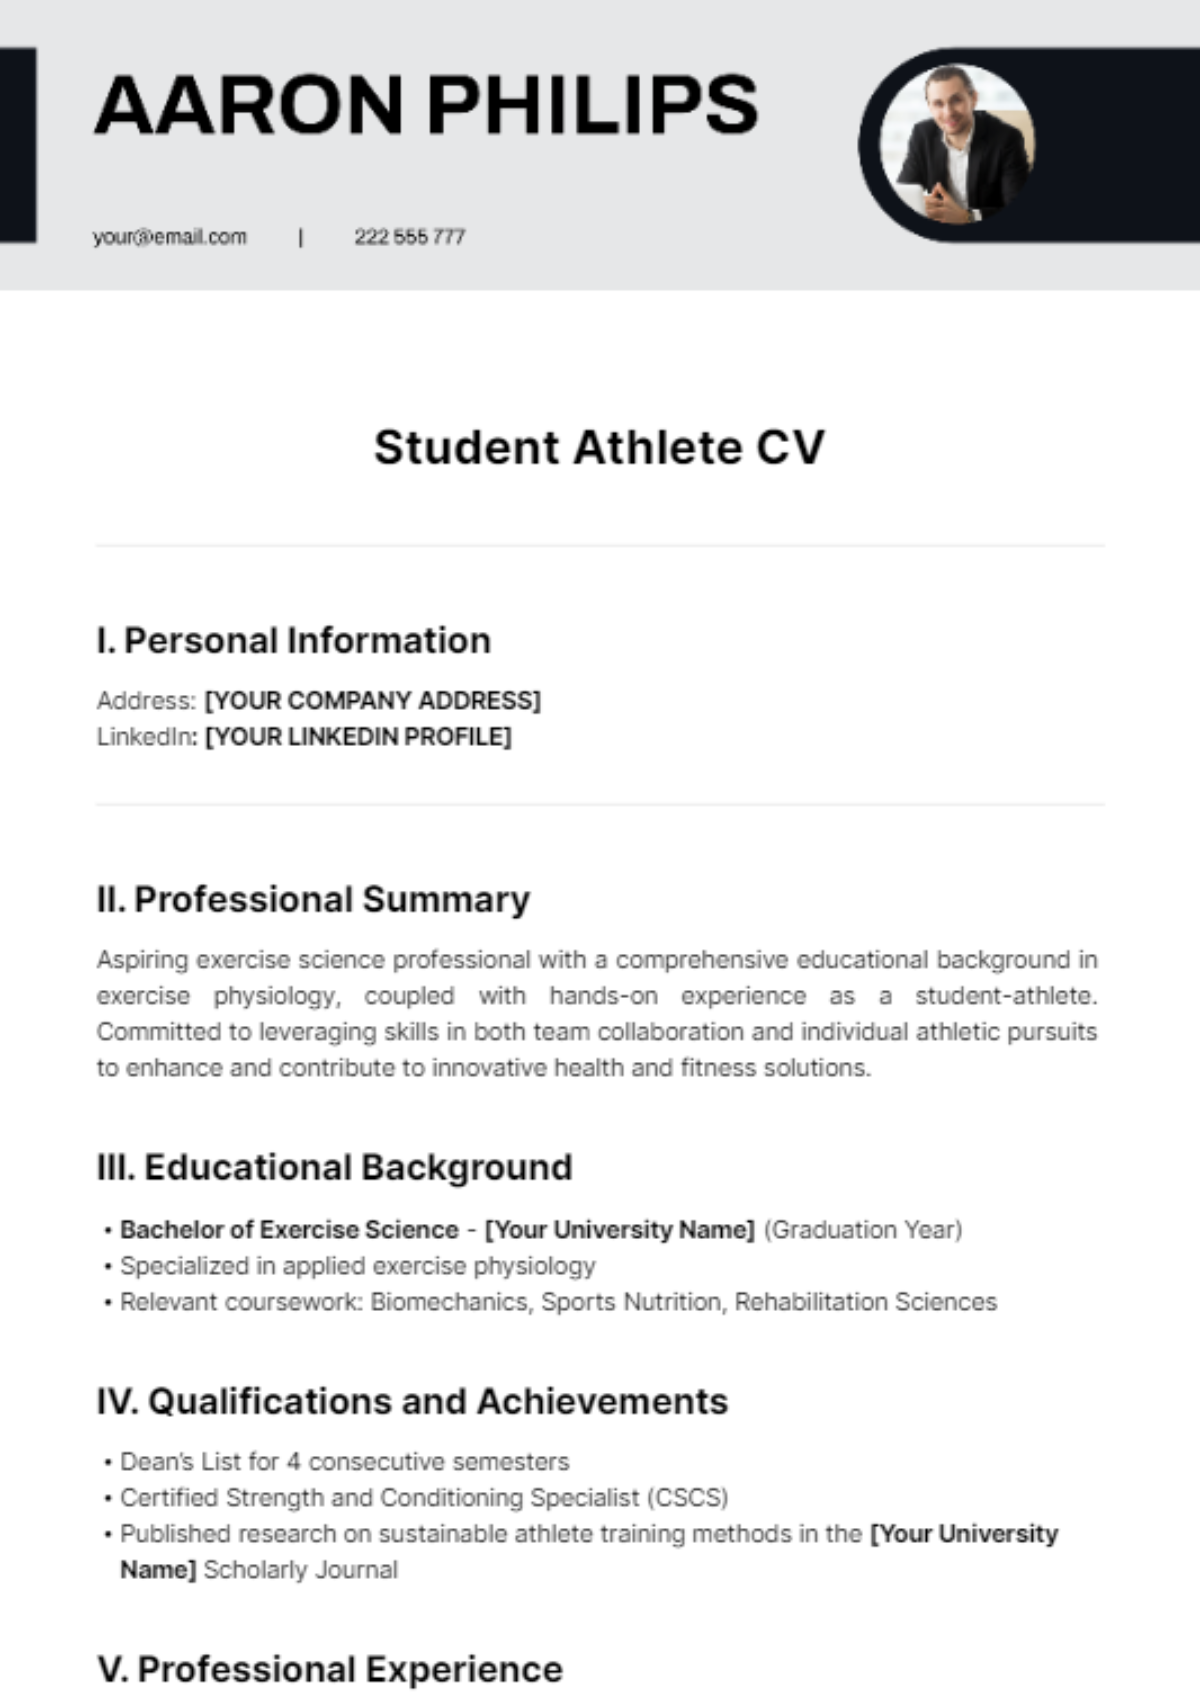 Student Athlete CV Template